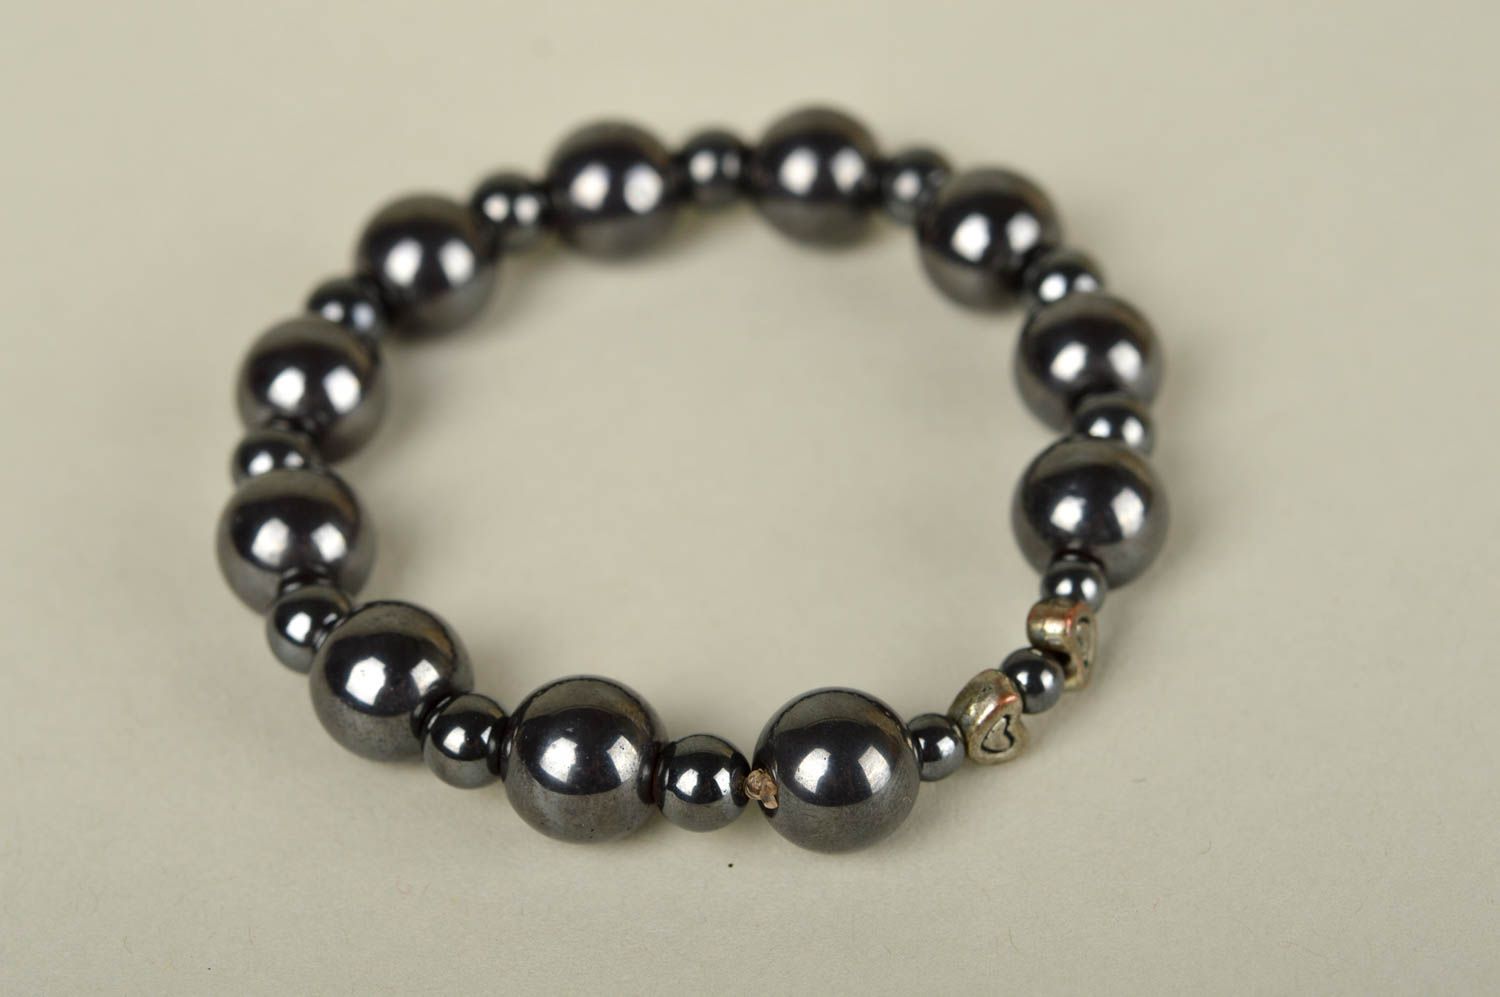 Hematite beads wrist adjustable bracelet for women photo 4